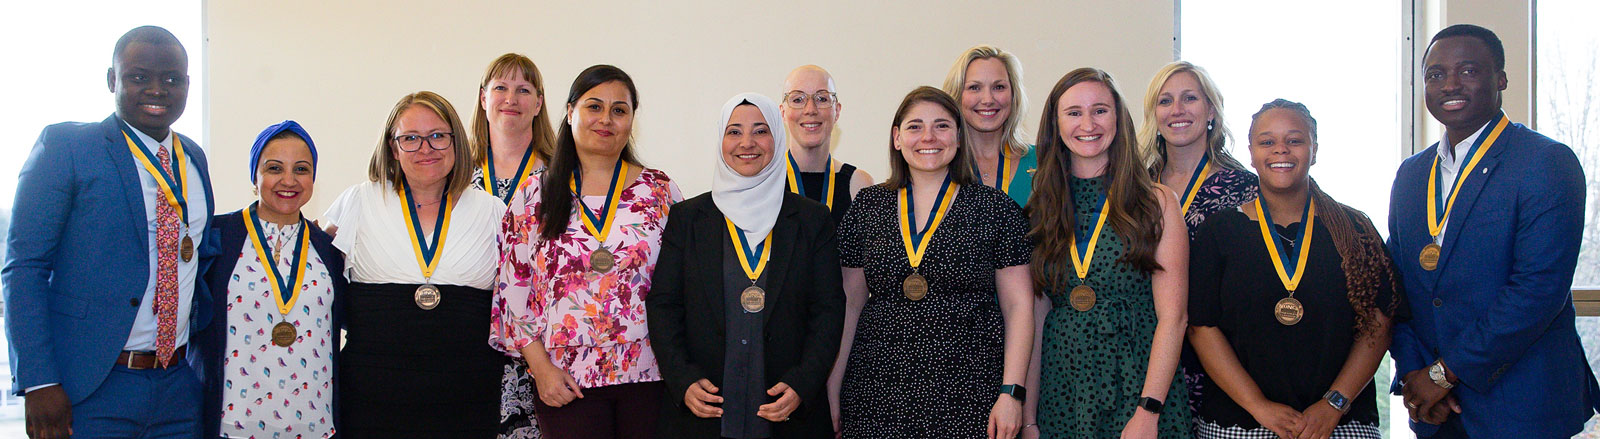 Spring 2022 Dean's Citation Awardees group photo